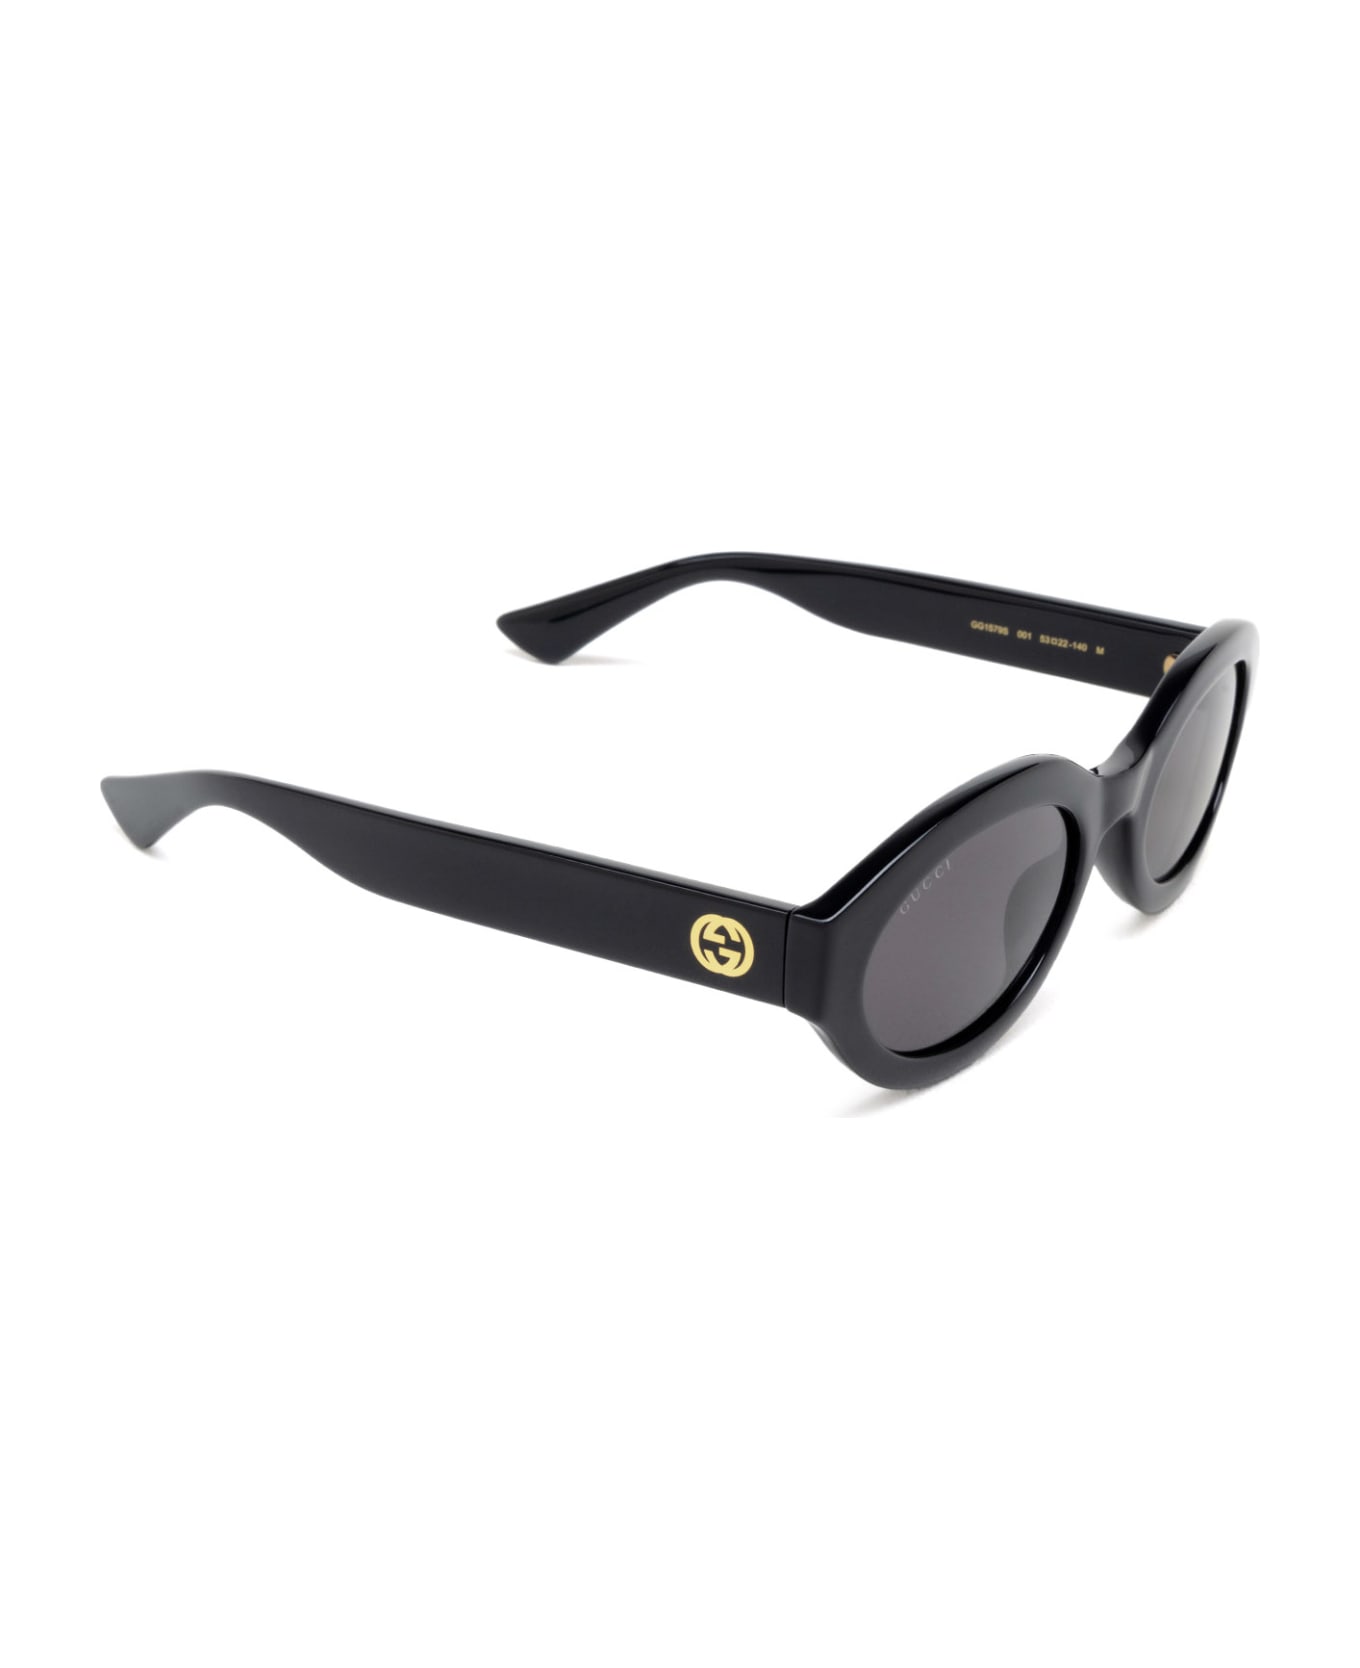 Gucci Eyewear Gg1579s Black Sunglasses - Black